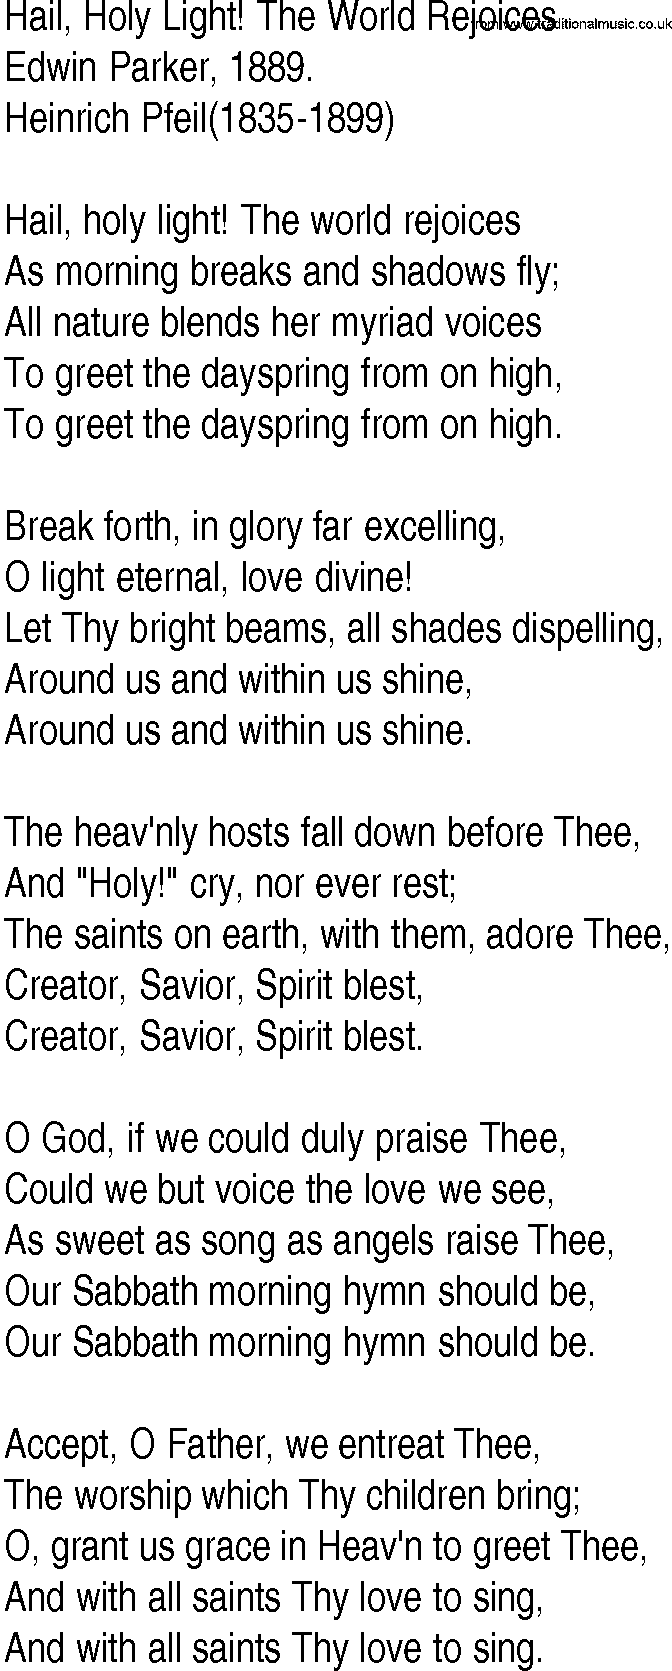 Hymn and Gospel Song: Hail, Holy Light! The World Rejoices by Edwin Parker lyrics